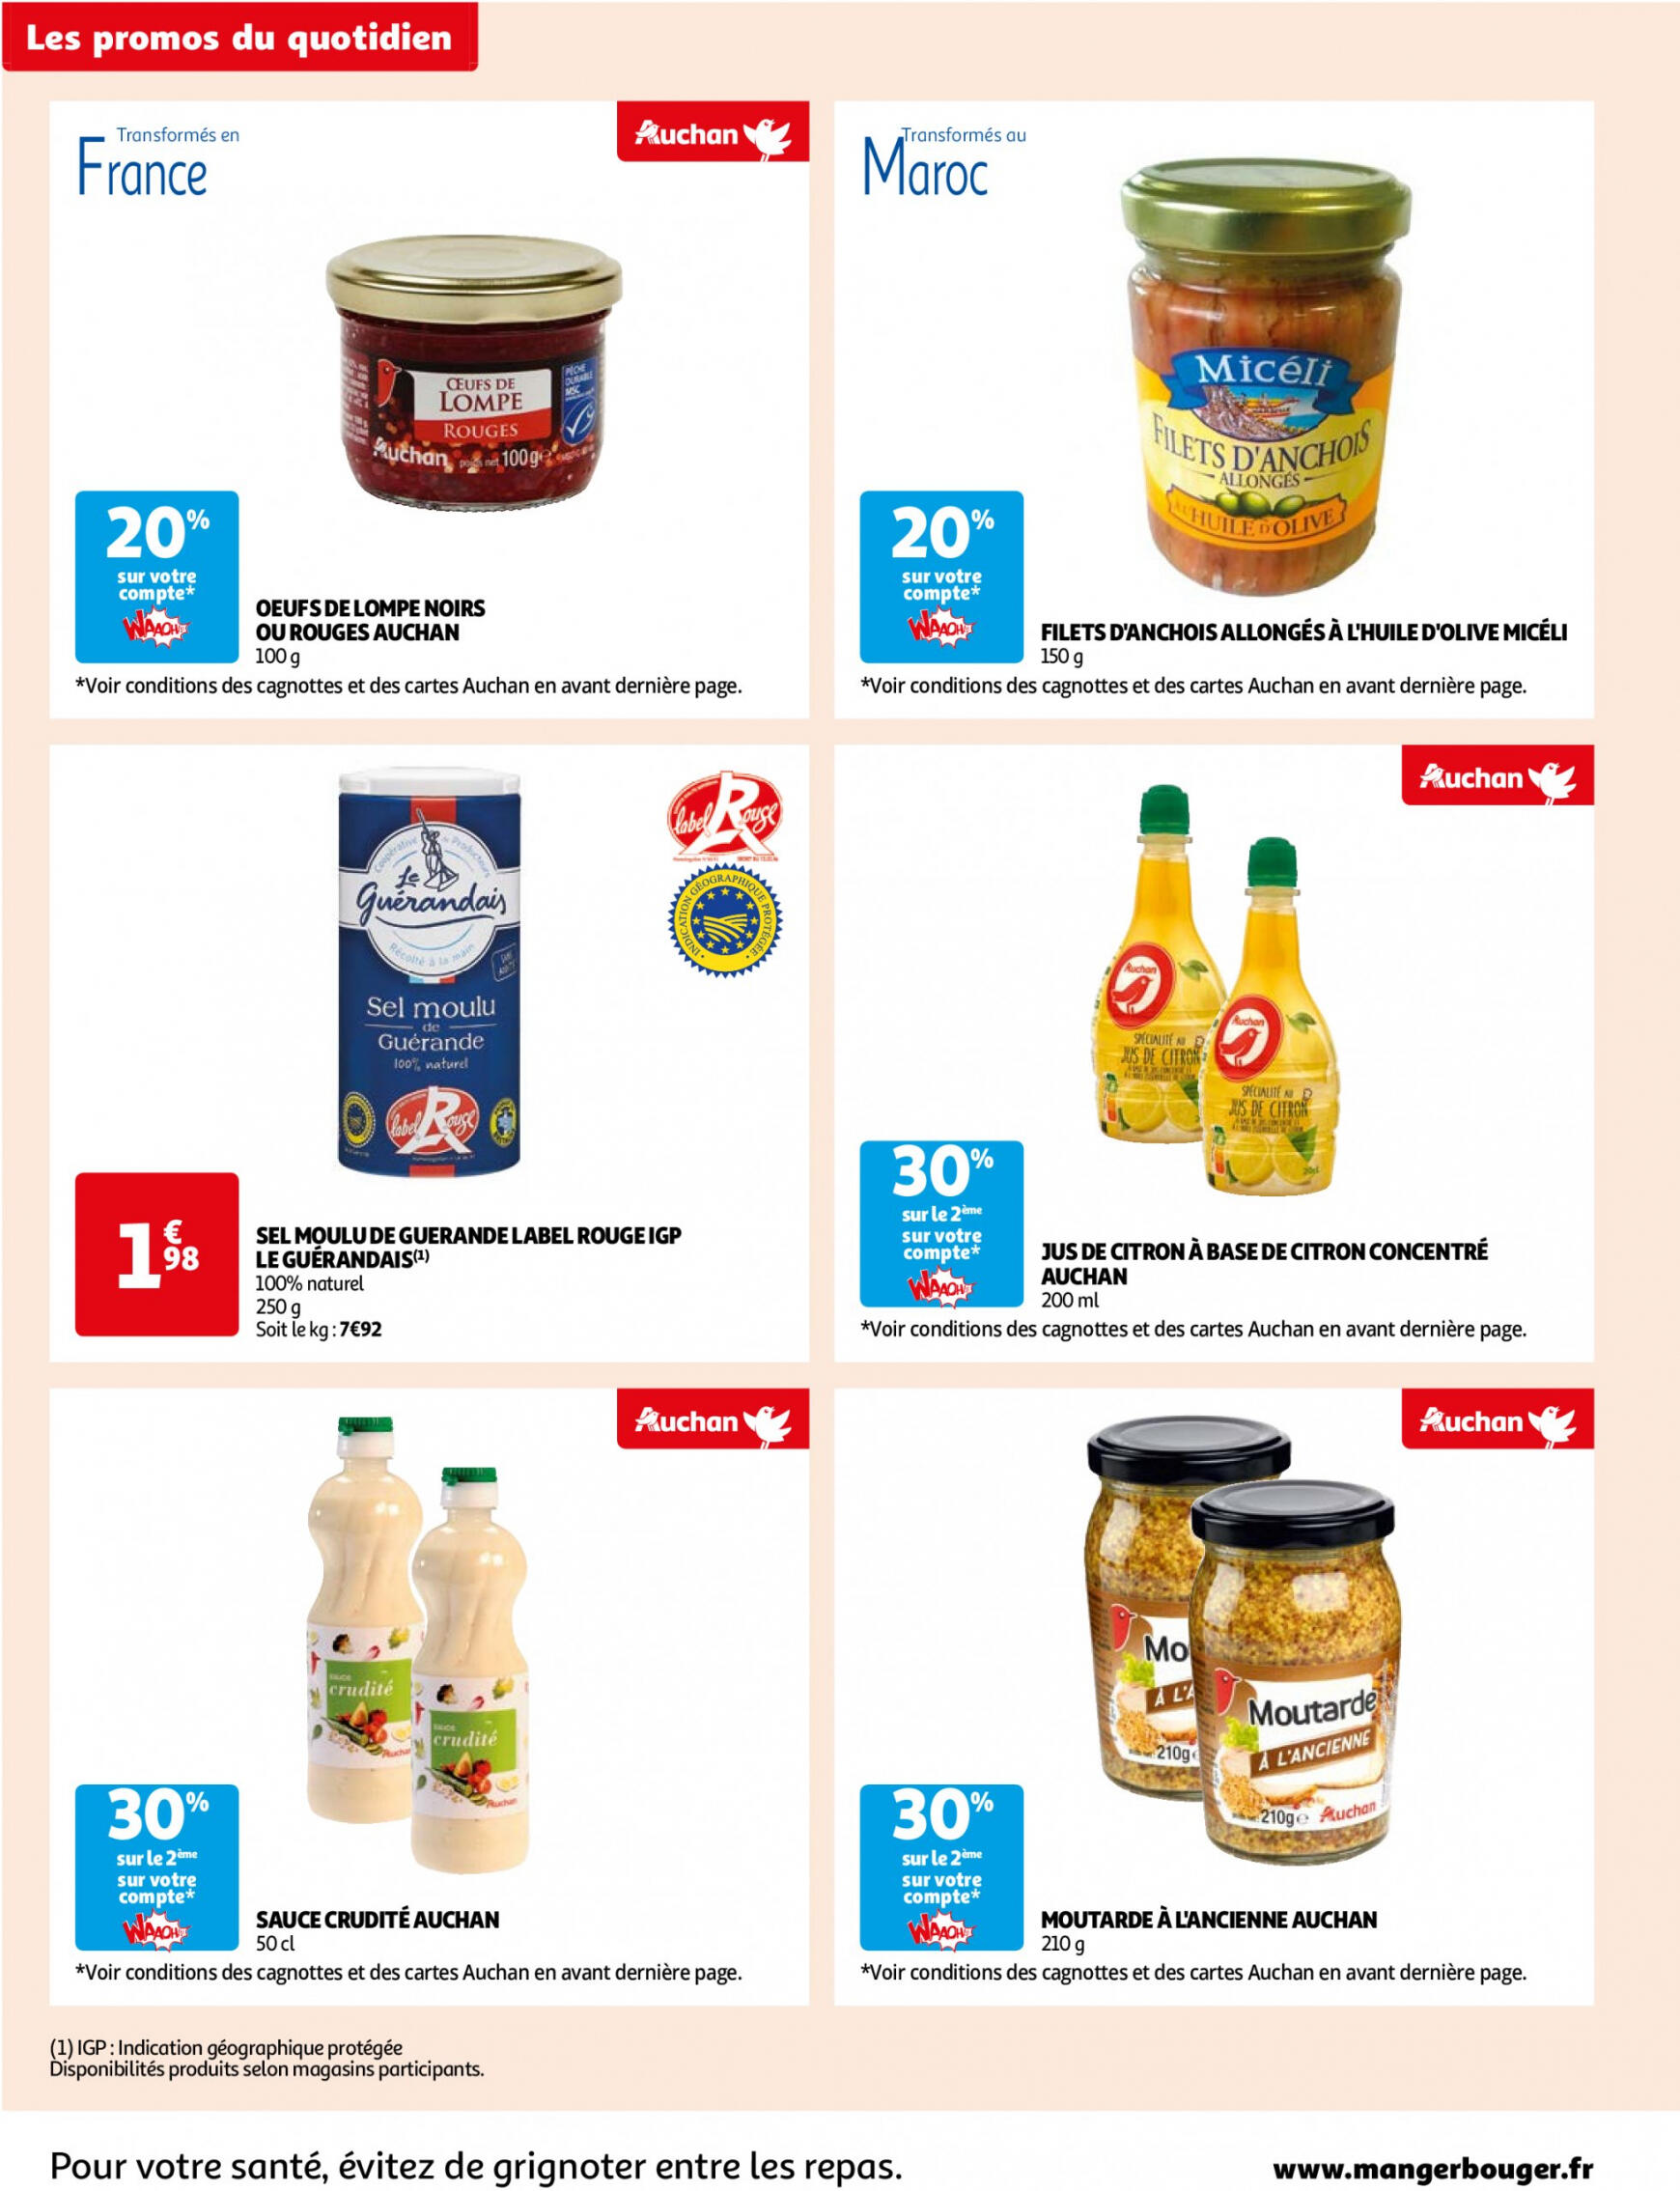 auchan - Auchan - Supermarché folder huidig 14.05. - 02.06. - page: 2